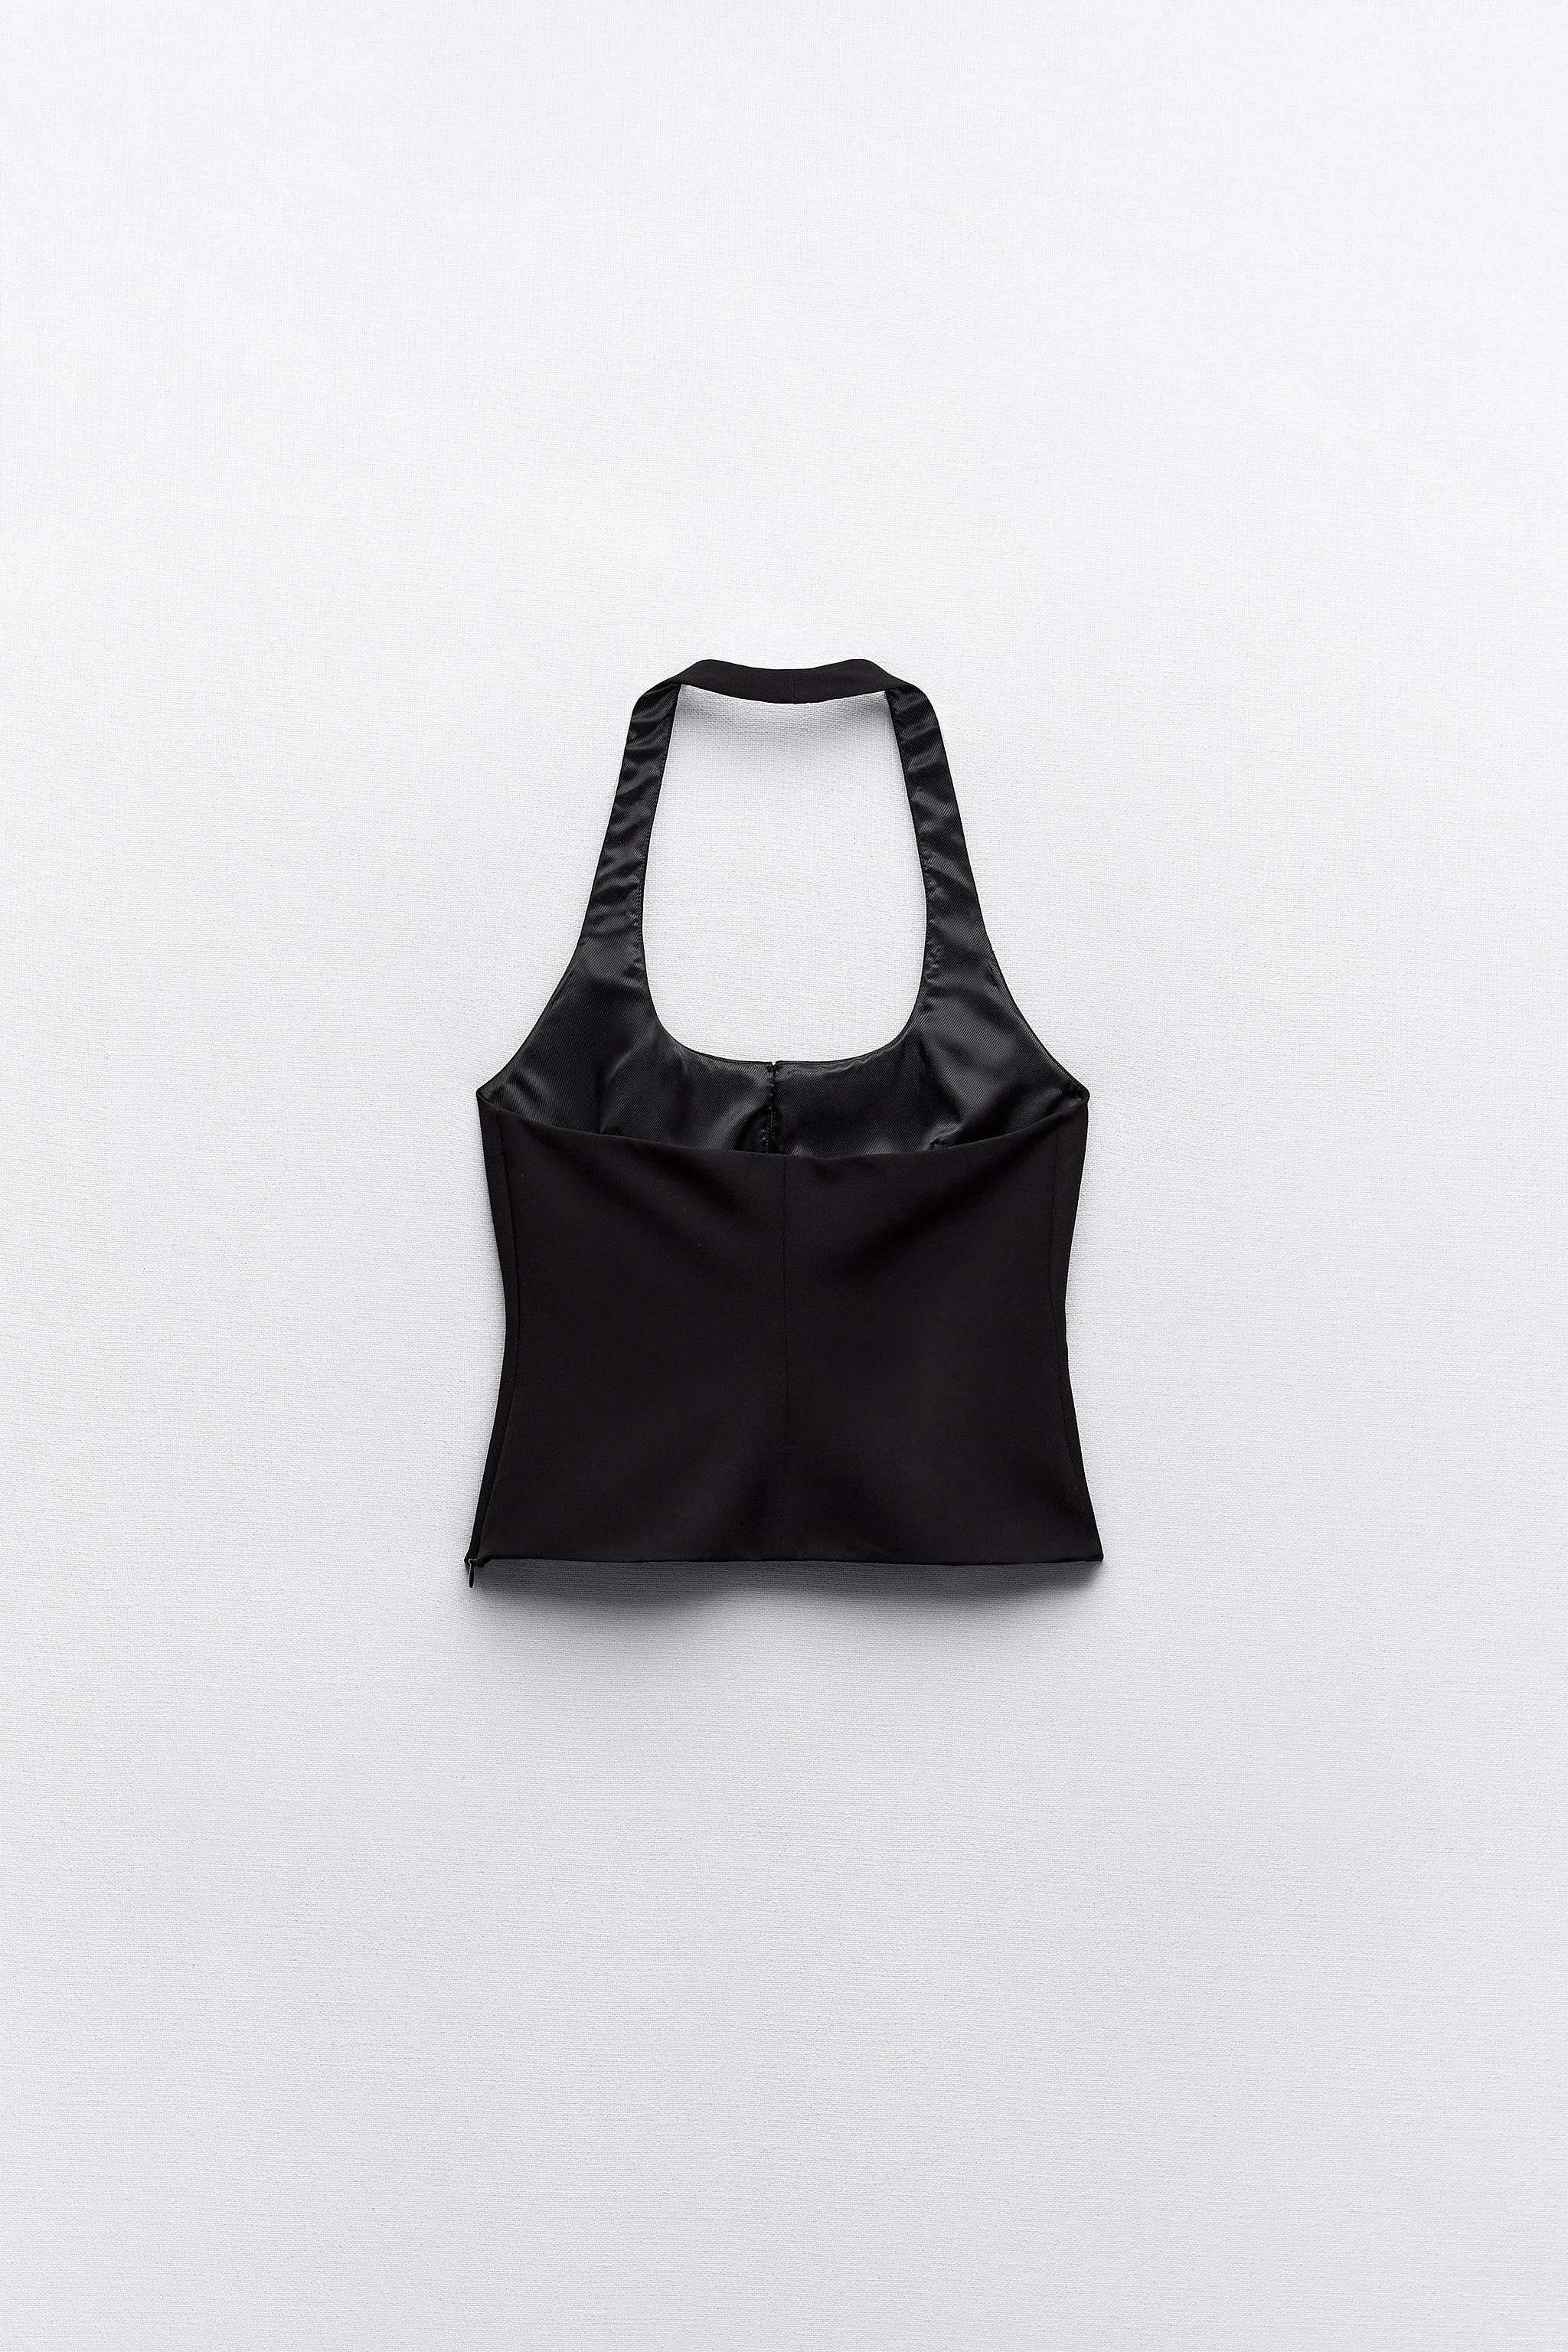 Zara Woman Black and White Halter Top, Tie Back, Size Medium